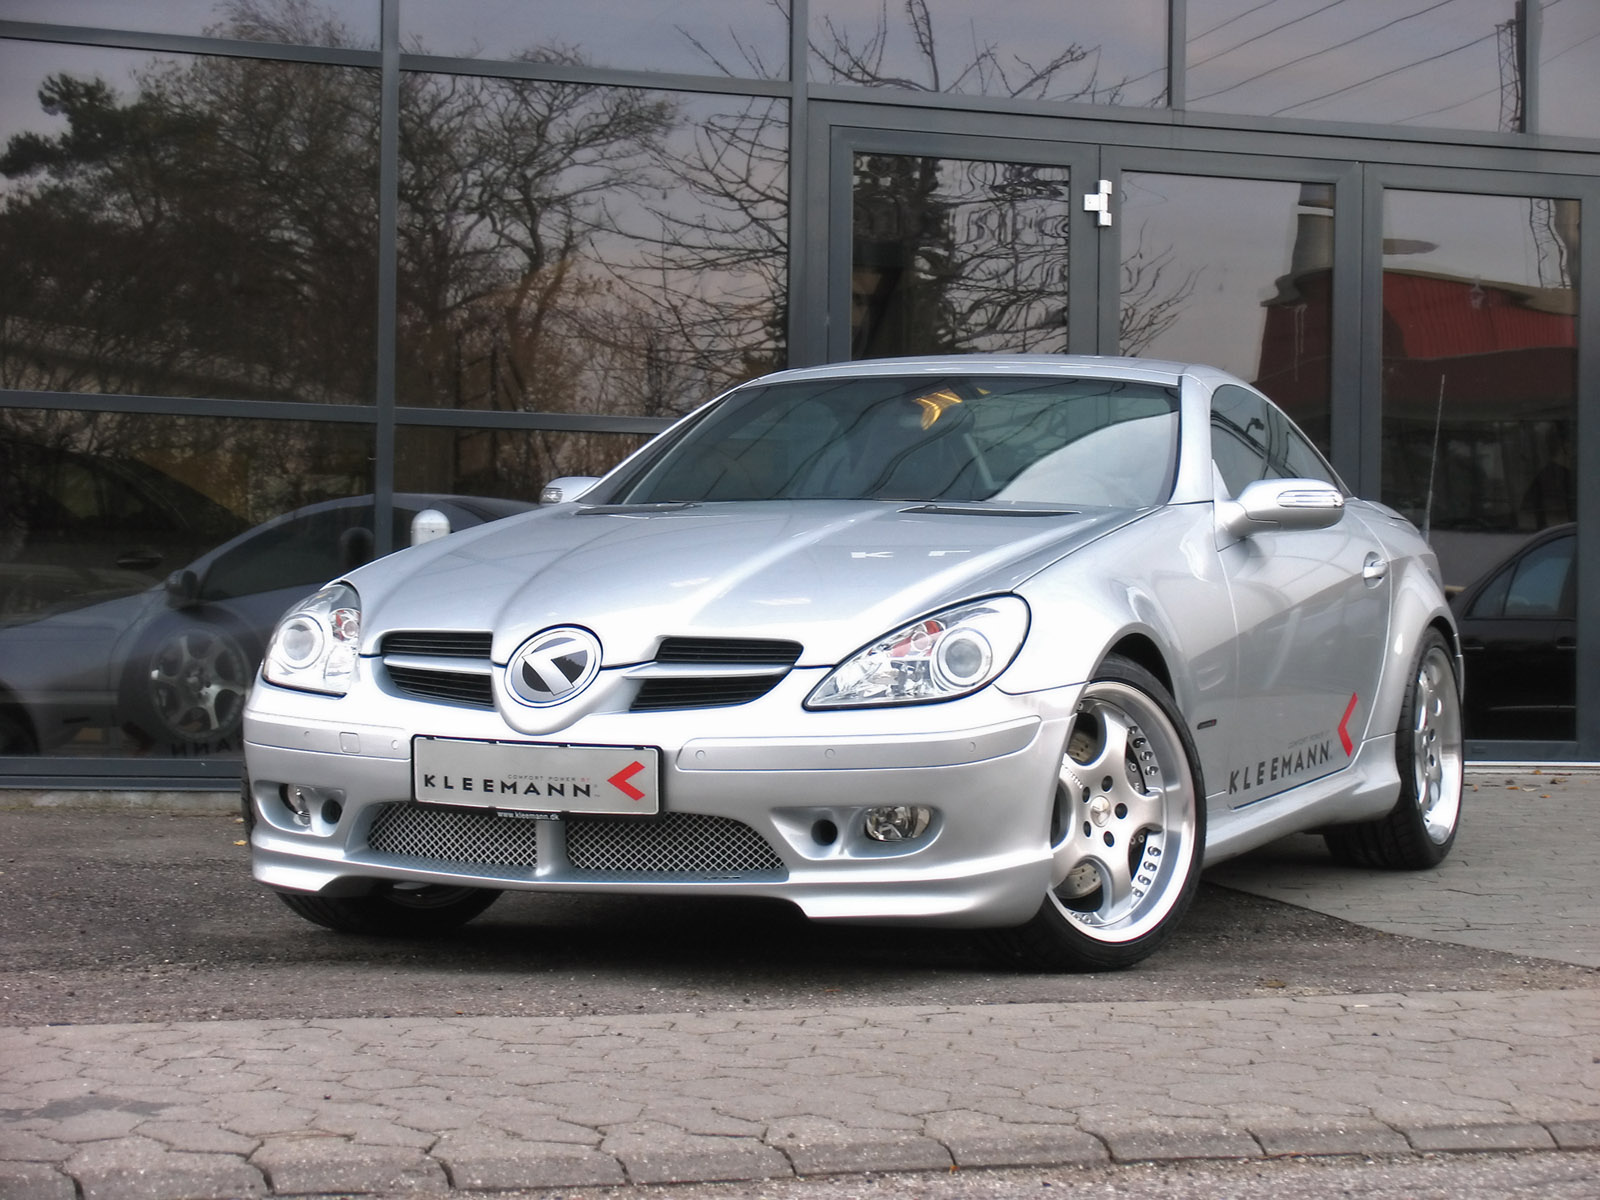 2006, Kleemann, Slk, 20k, Mercedes, Benz, Tuning, Supercar, Supercars Wallpaper